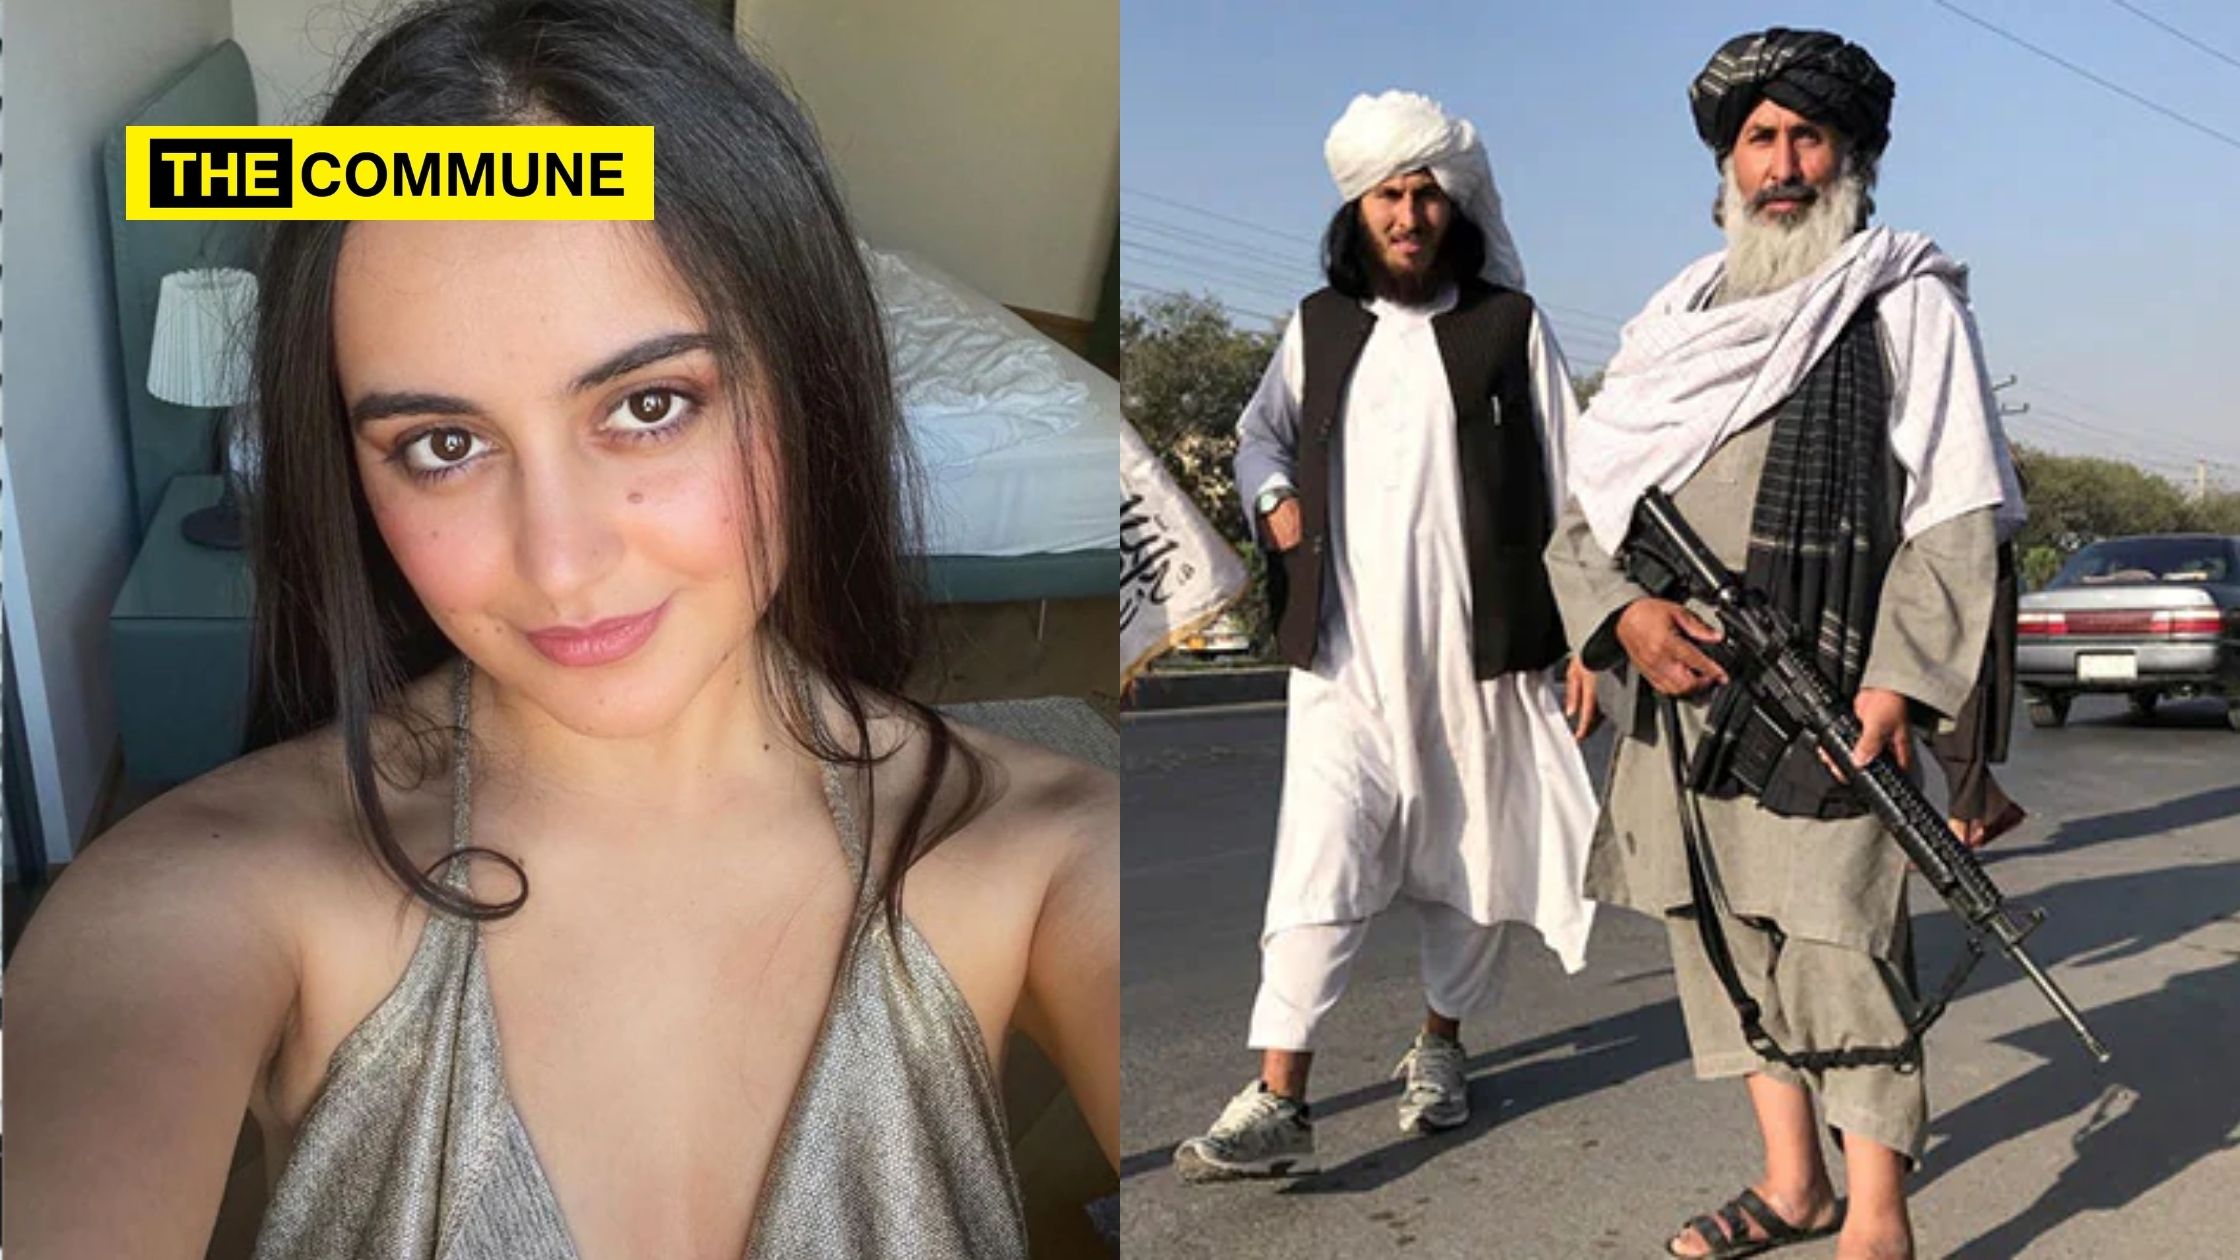 Yasmeena Ali Hd Porno Videos - British-Afghan porn star Yasmeena Ali calls Taliban as 'barbaric caveman'  afraid of educating women - The Commune